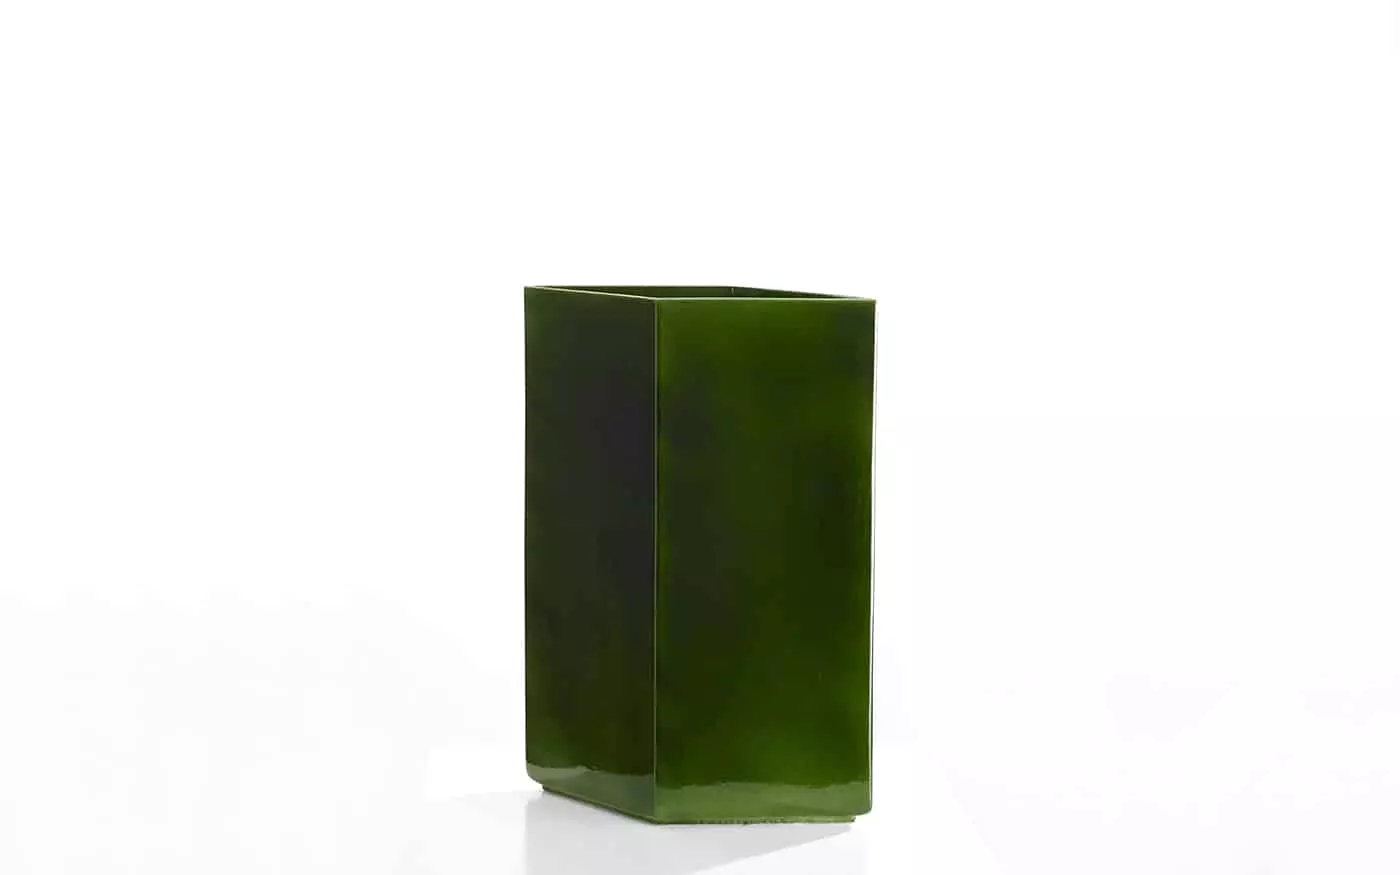 Vase Losange 67 green - Ronan & Erwan Bouroullec - Mirror - Galerie kreo